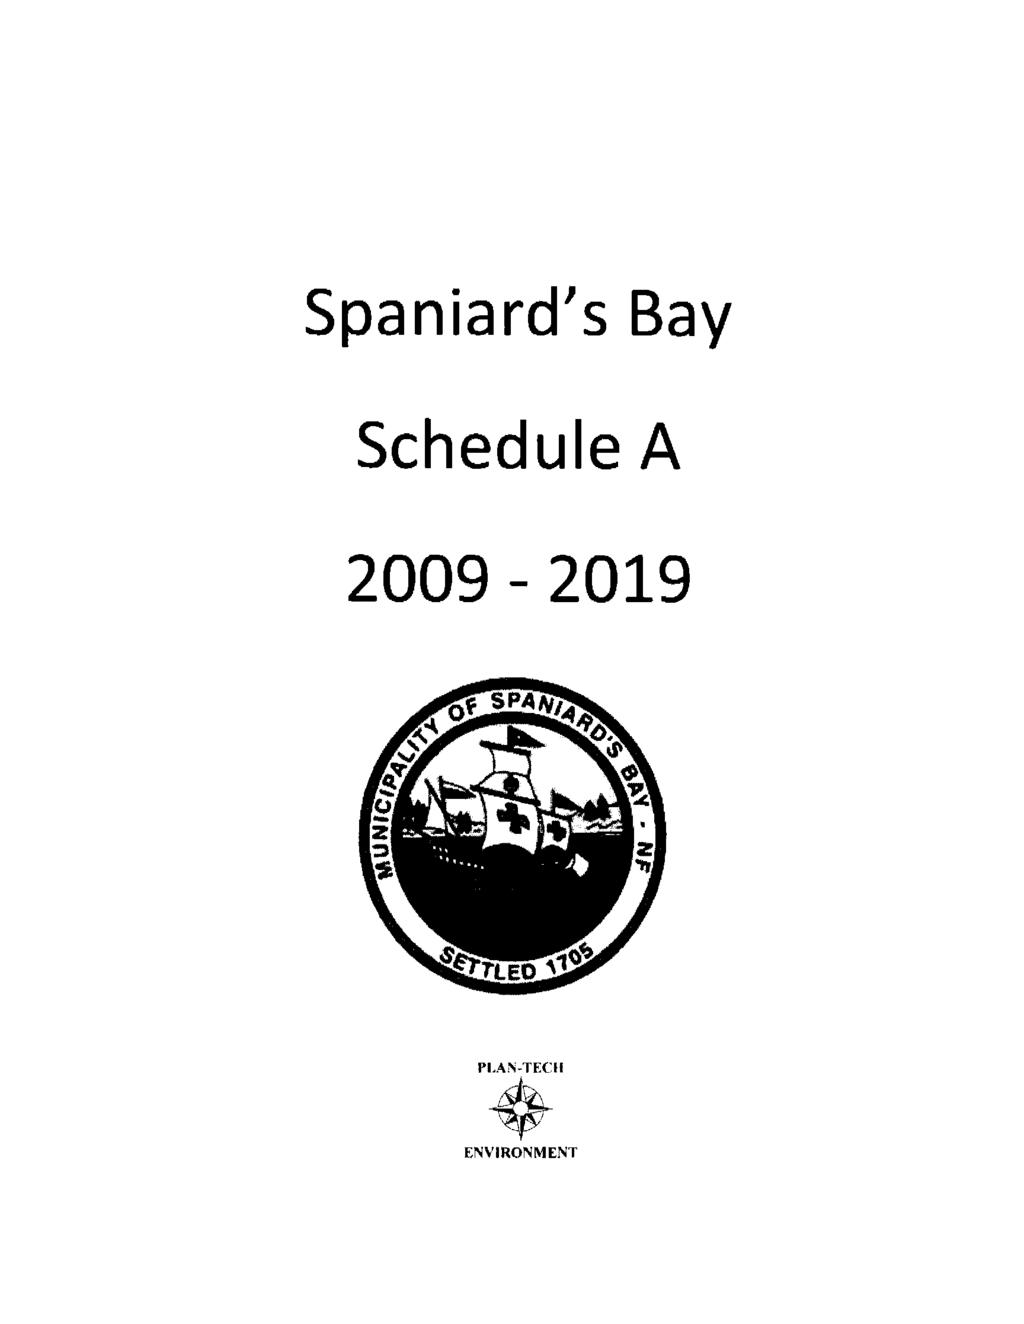 Spaniard's Bay Schedule A